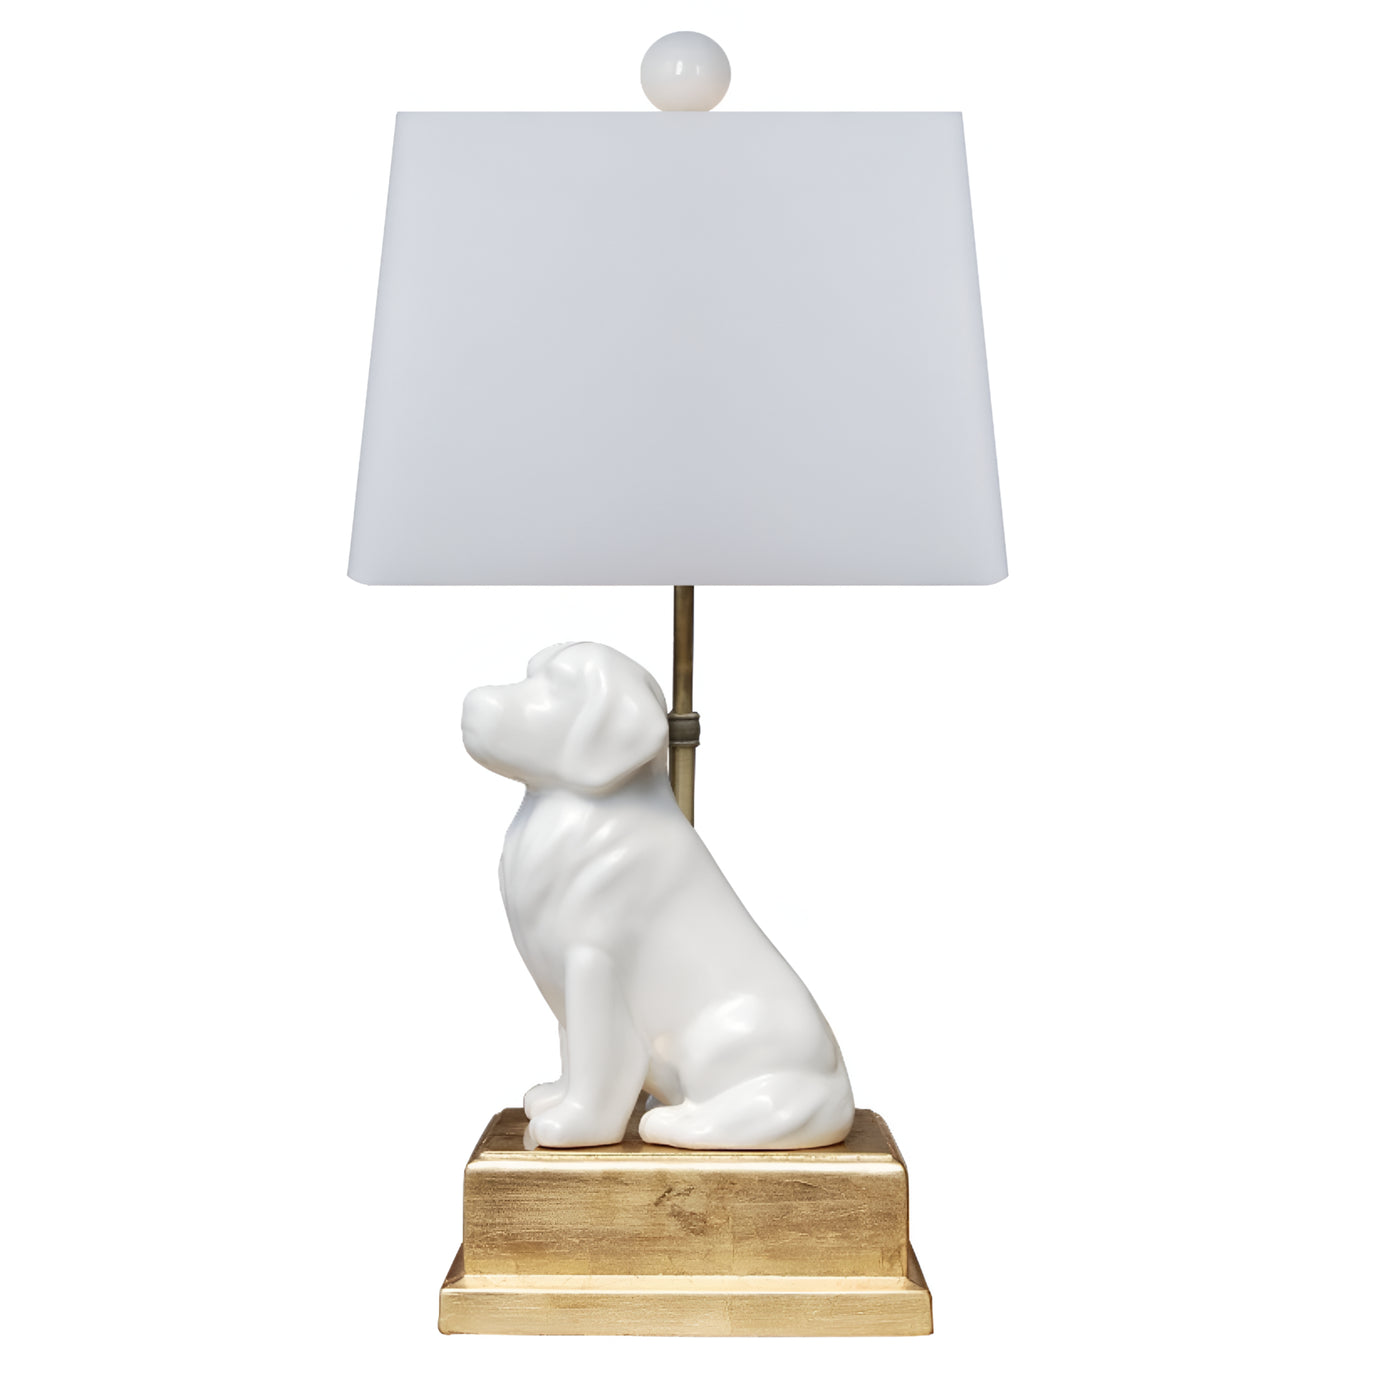 White Dog lamp